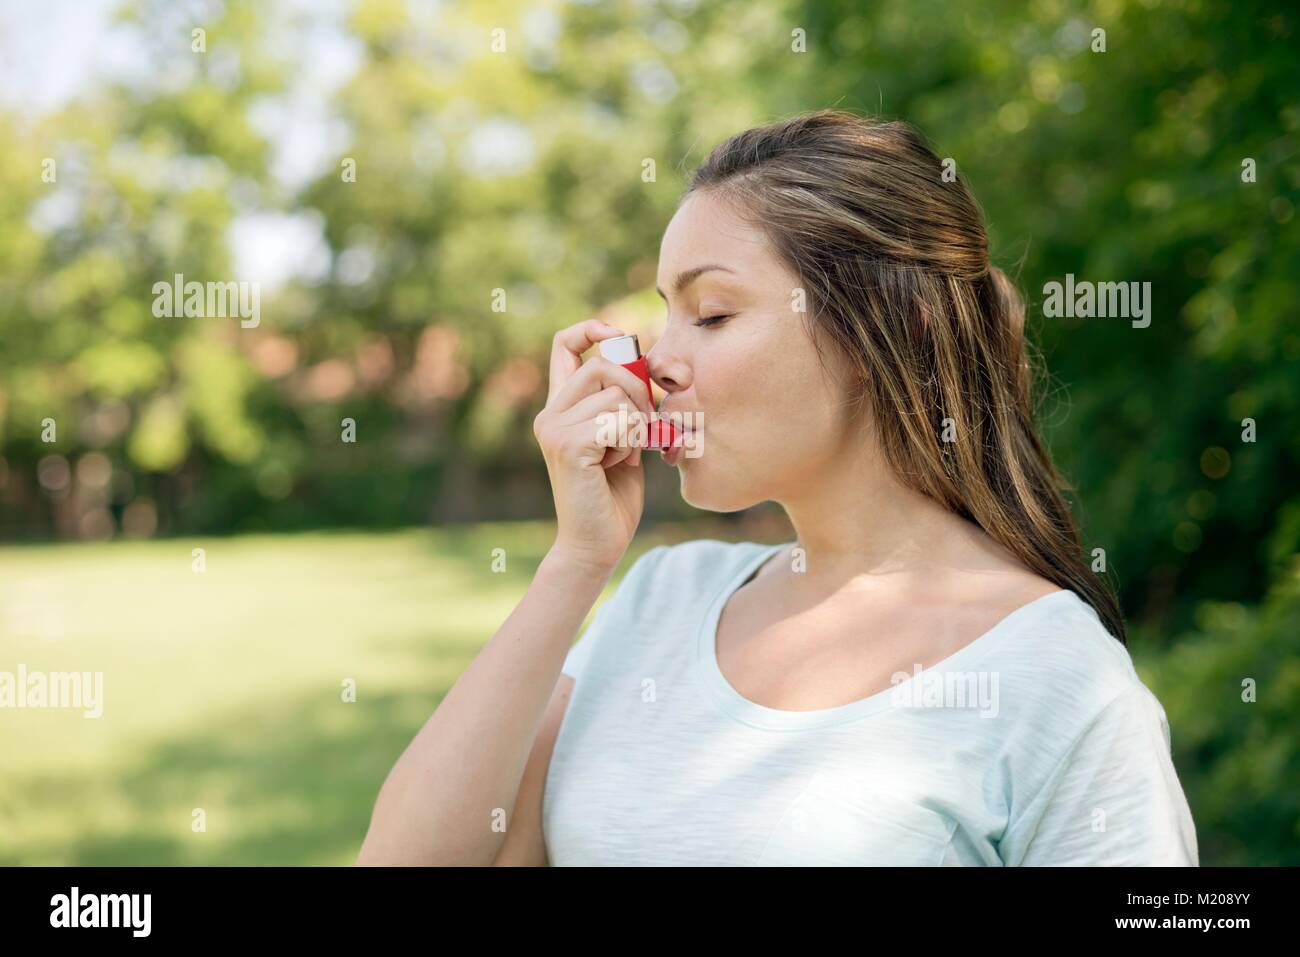 Young woman using an inhaler. Stock Photo